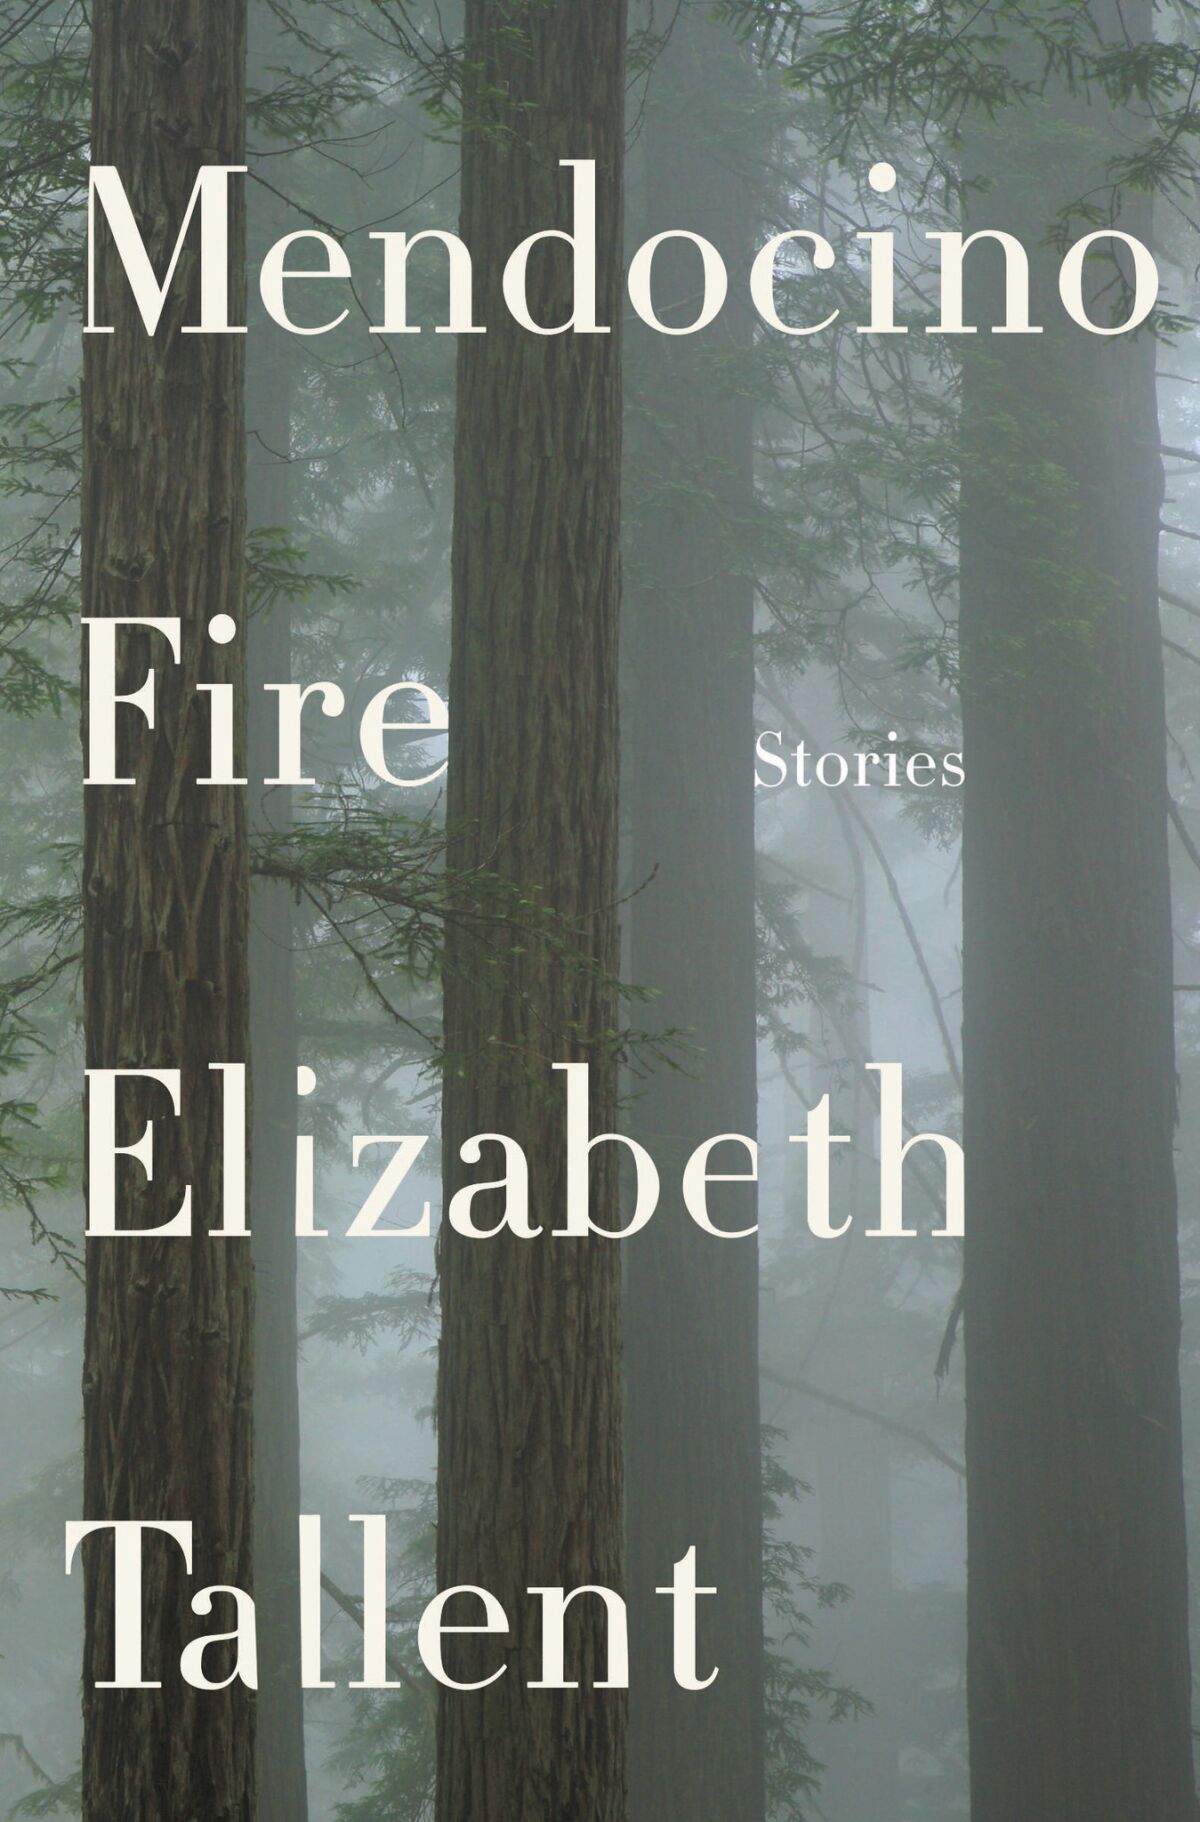 "Mendocino Fire" by Elizabeth Tallent